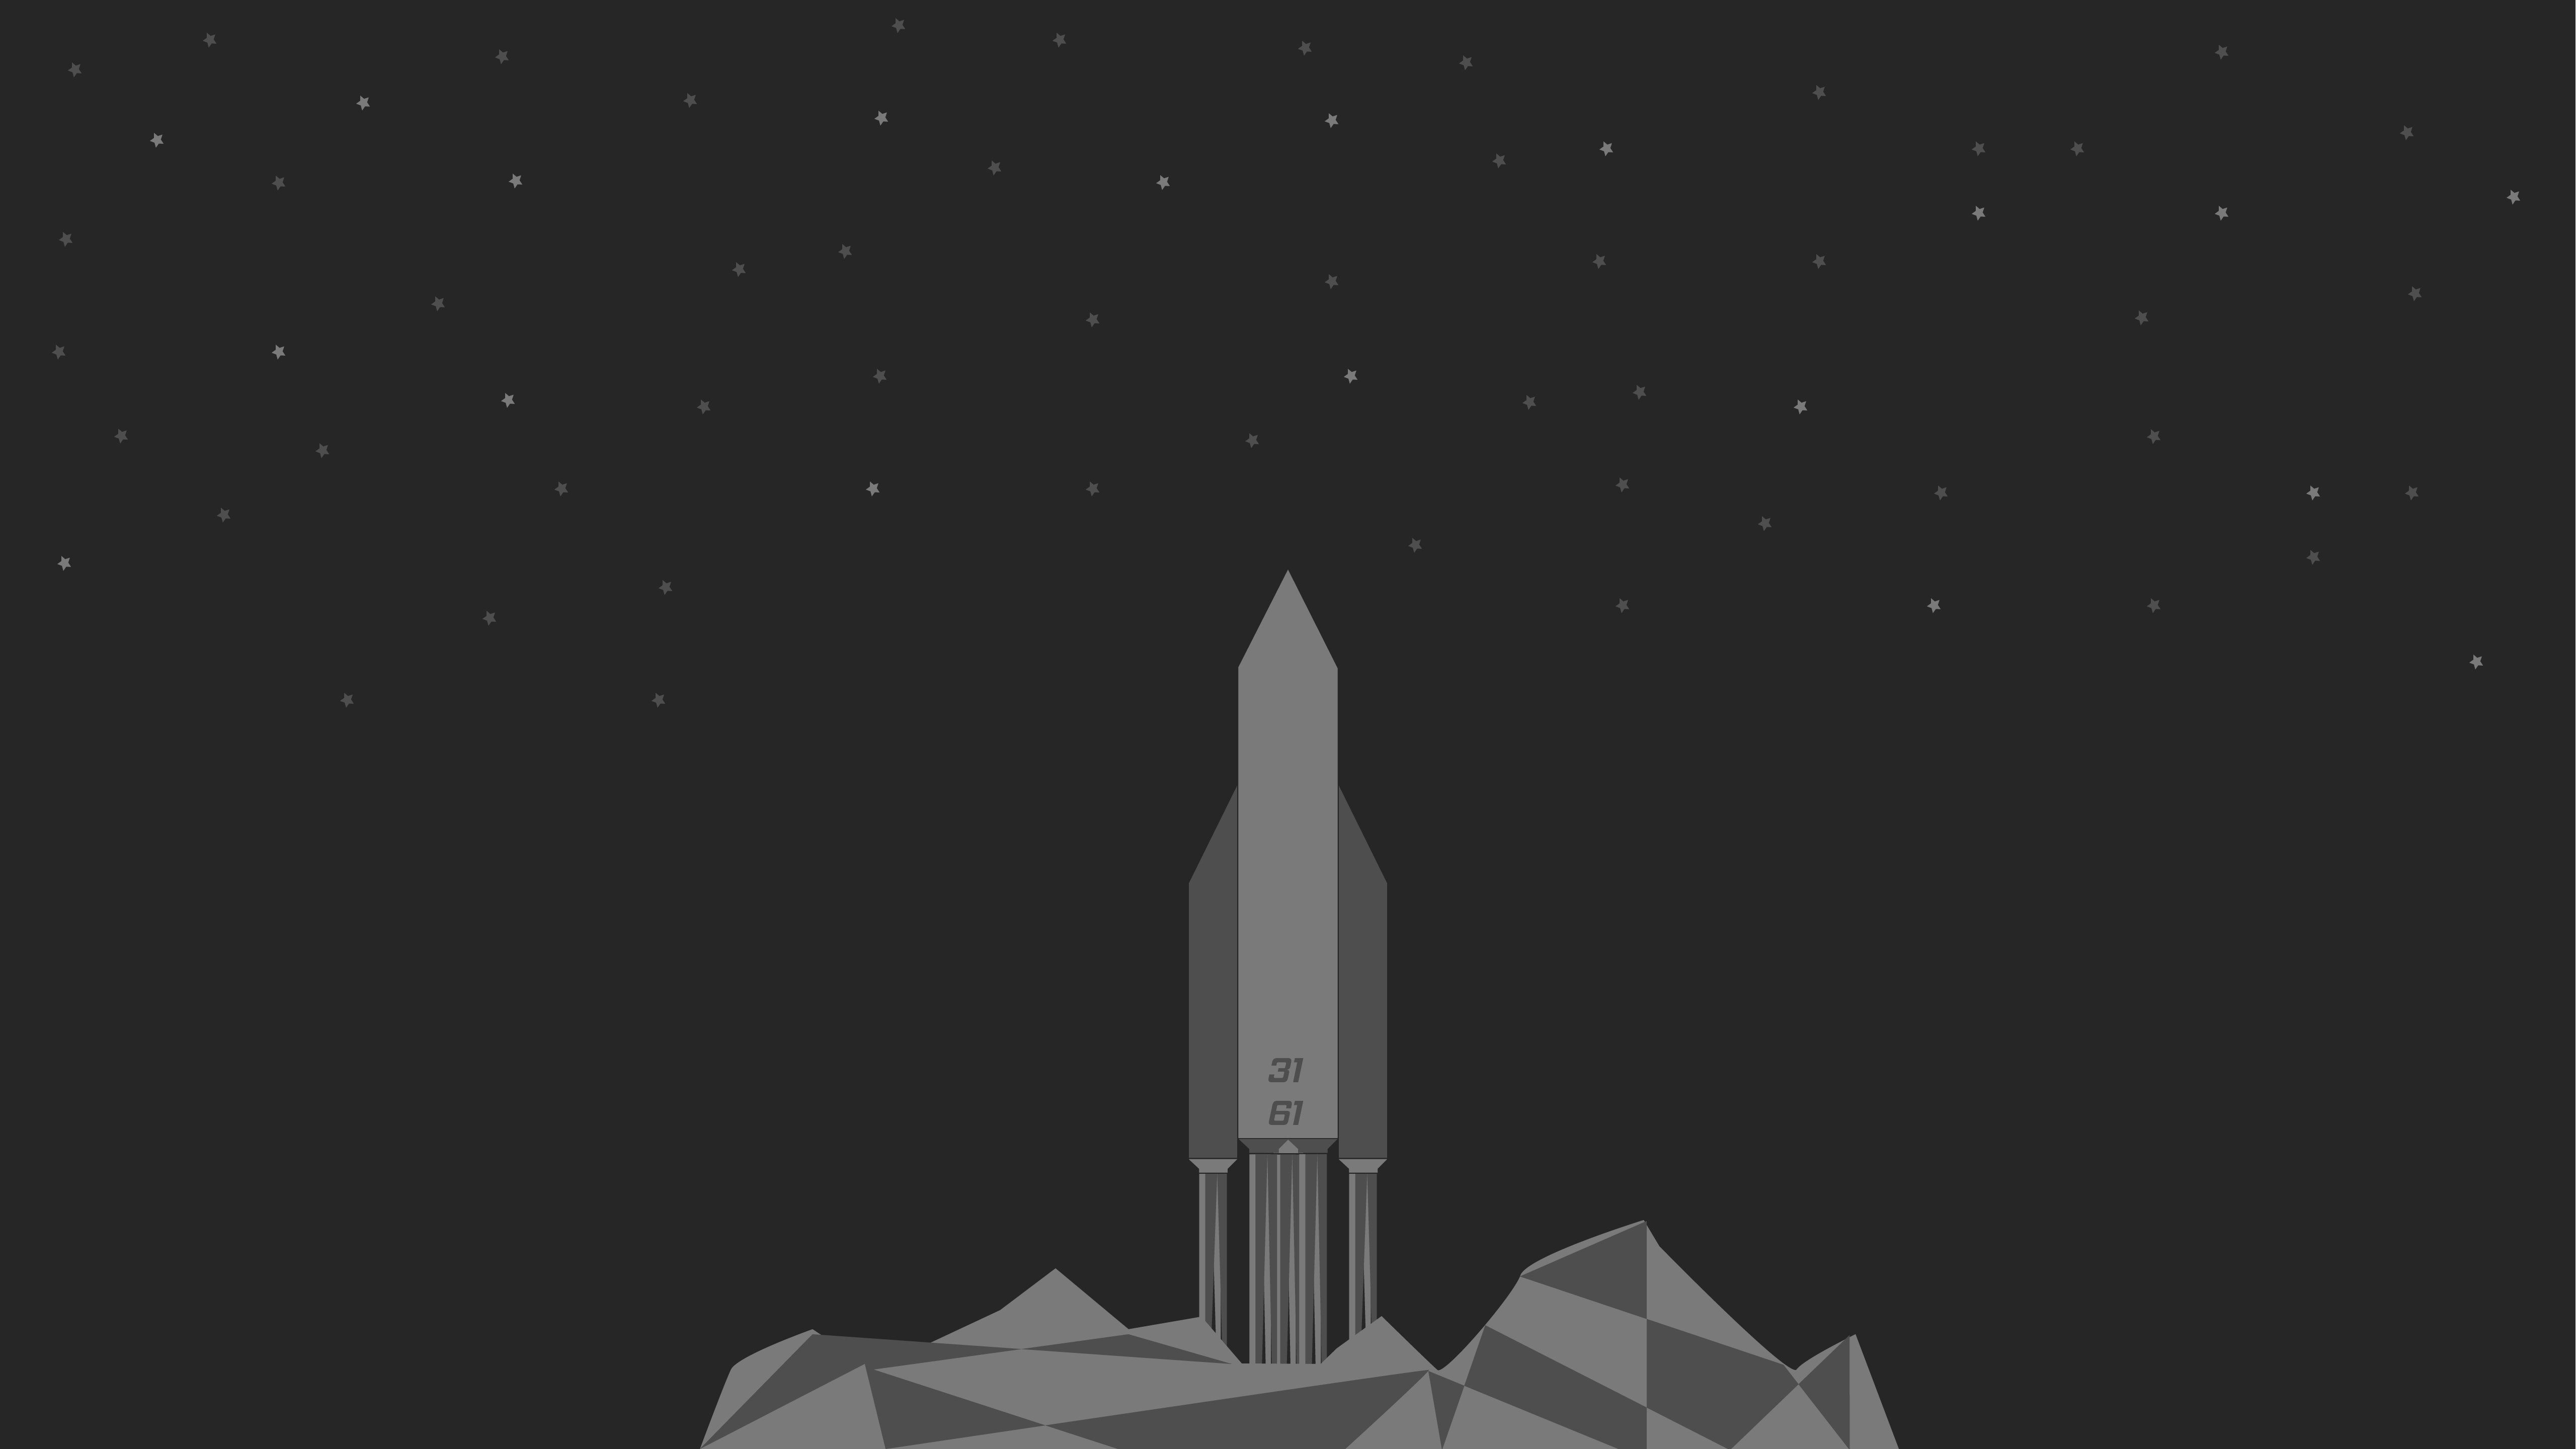 Rocket Launch Images  Free Download on Freepik